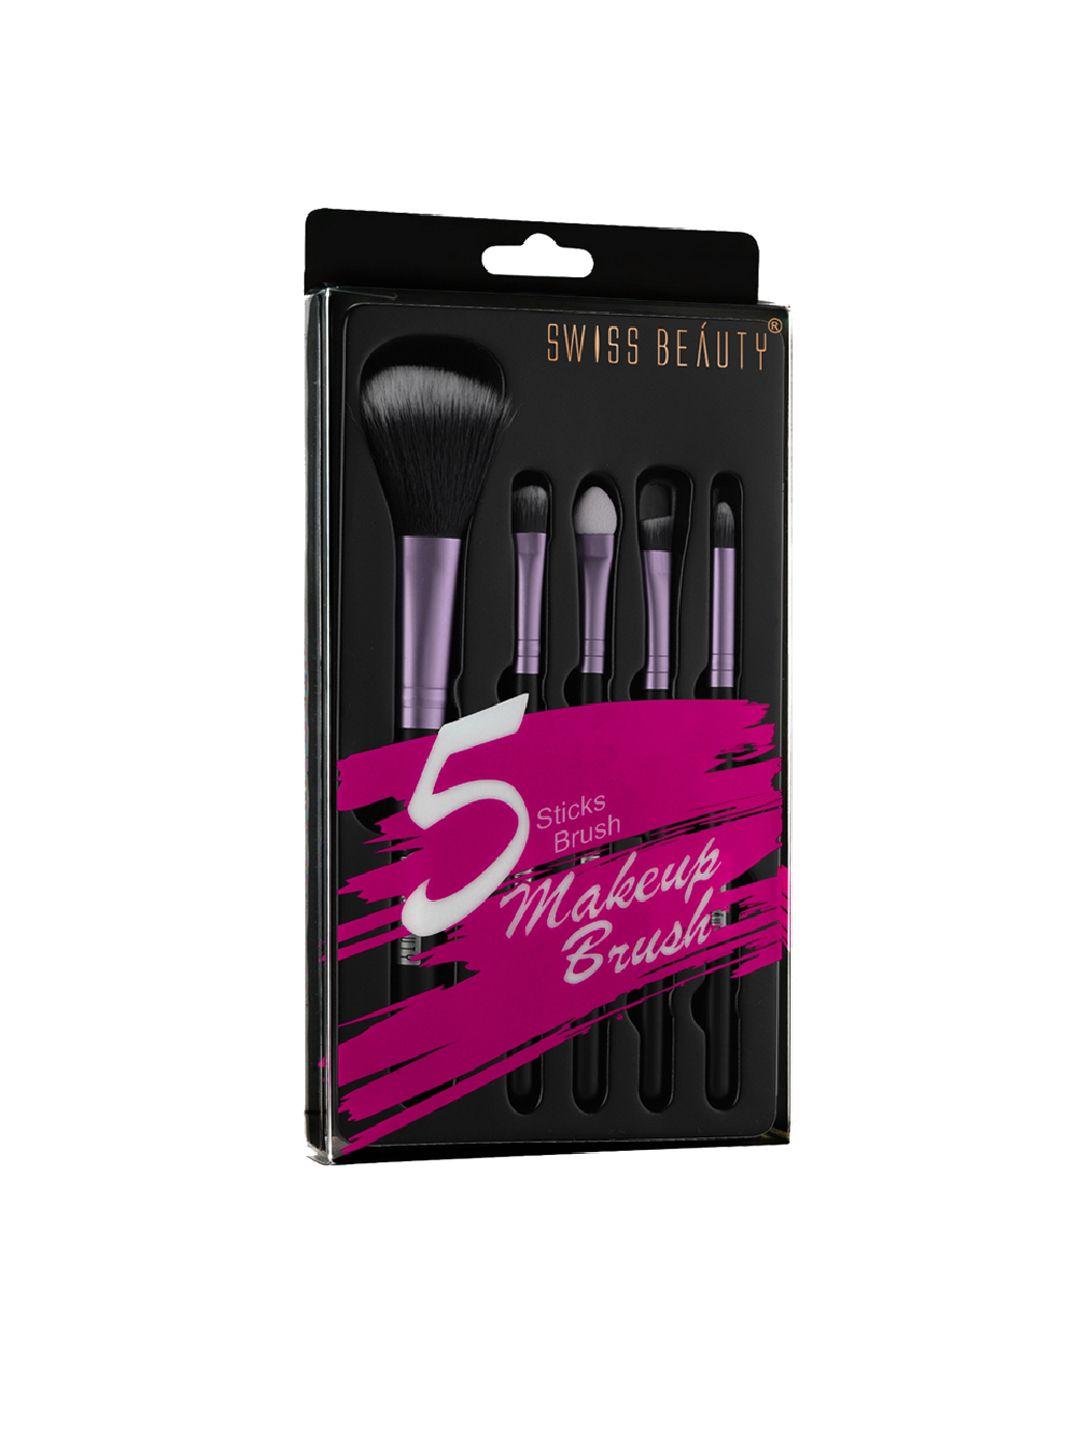 swiss beauty set of 5 makeup brushes - purple